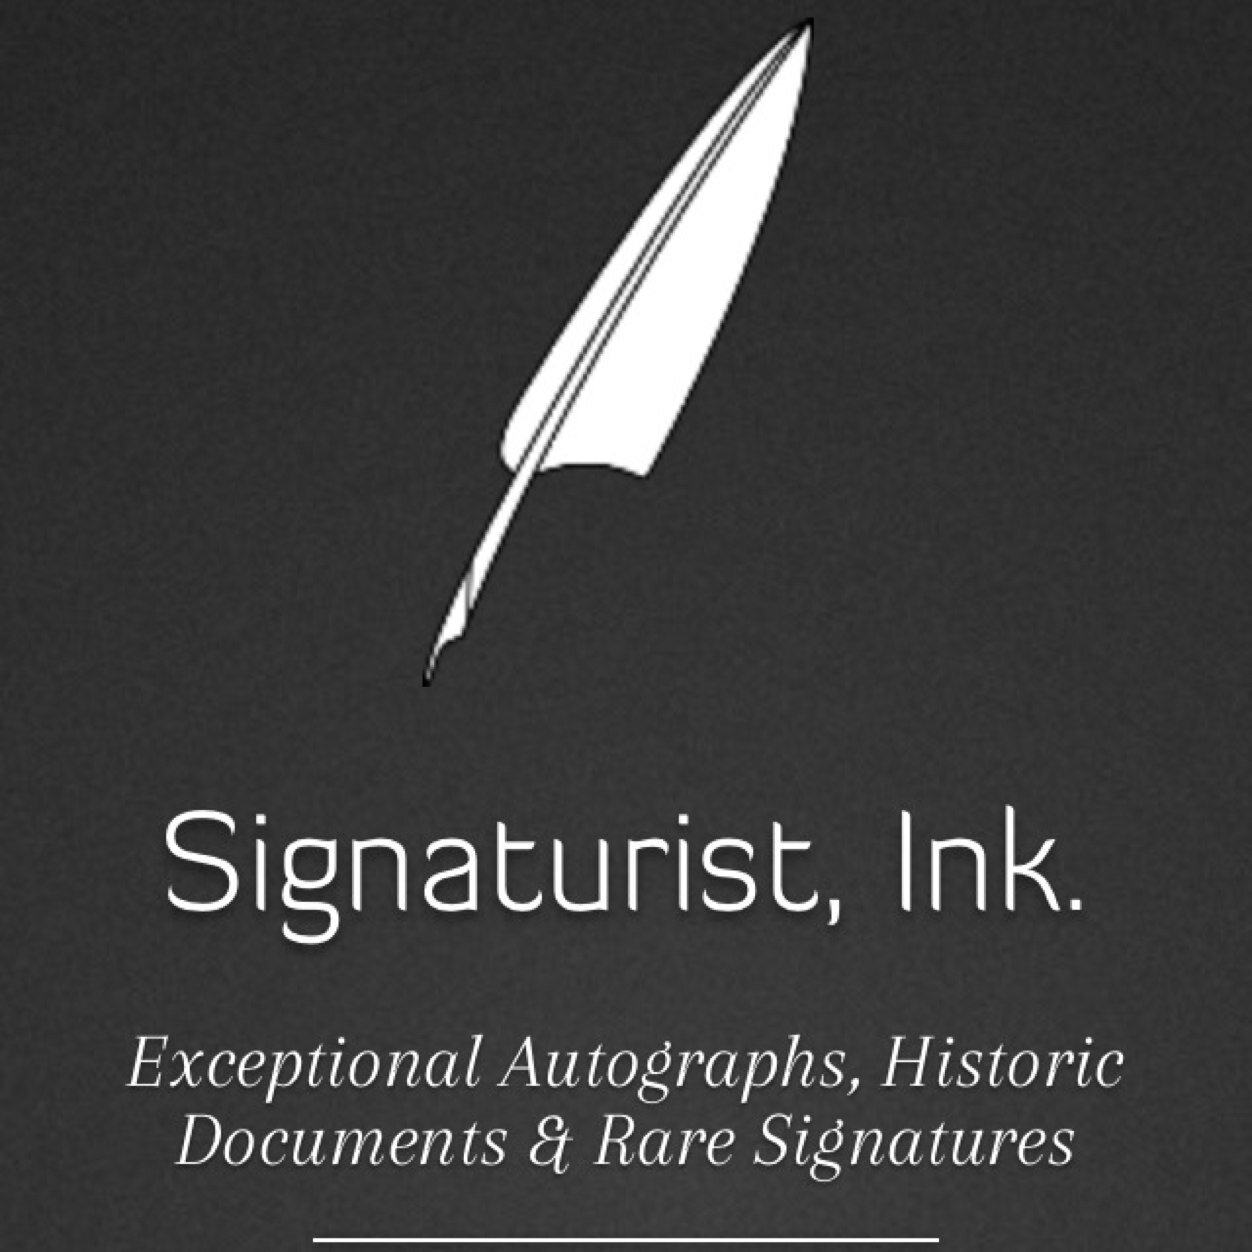 Exceptional Autographs, Historic Documents & Rare Signatures